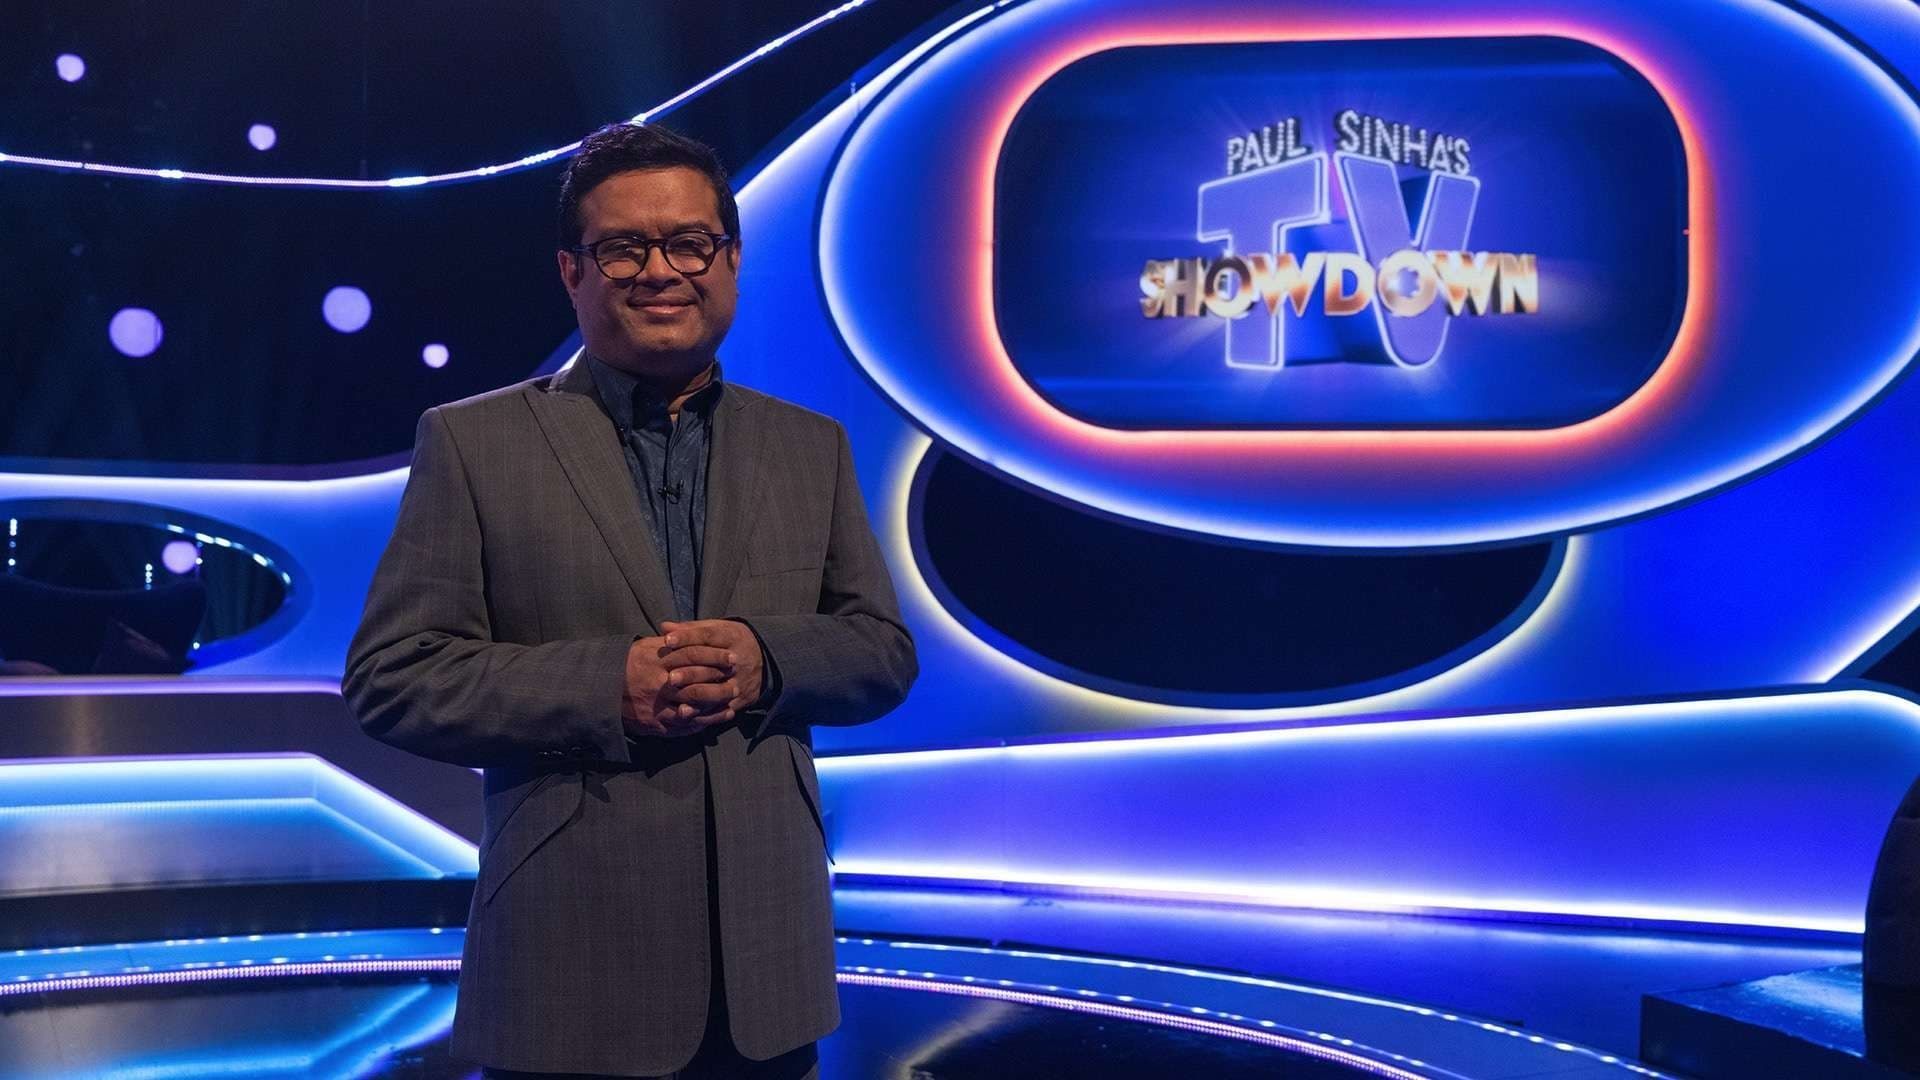 Paul Sinha's TV Showdown background